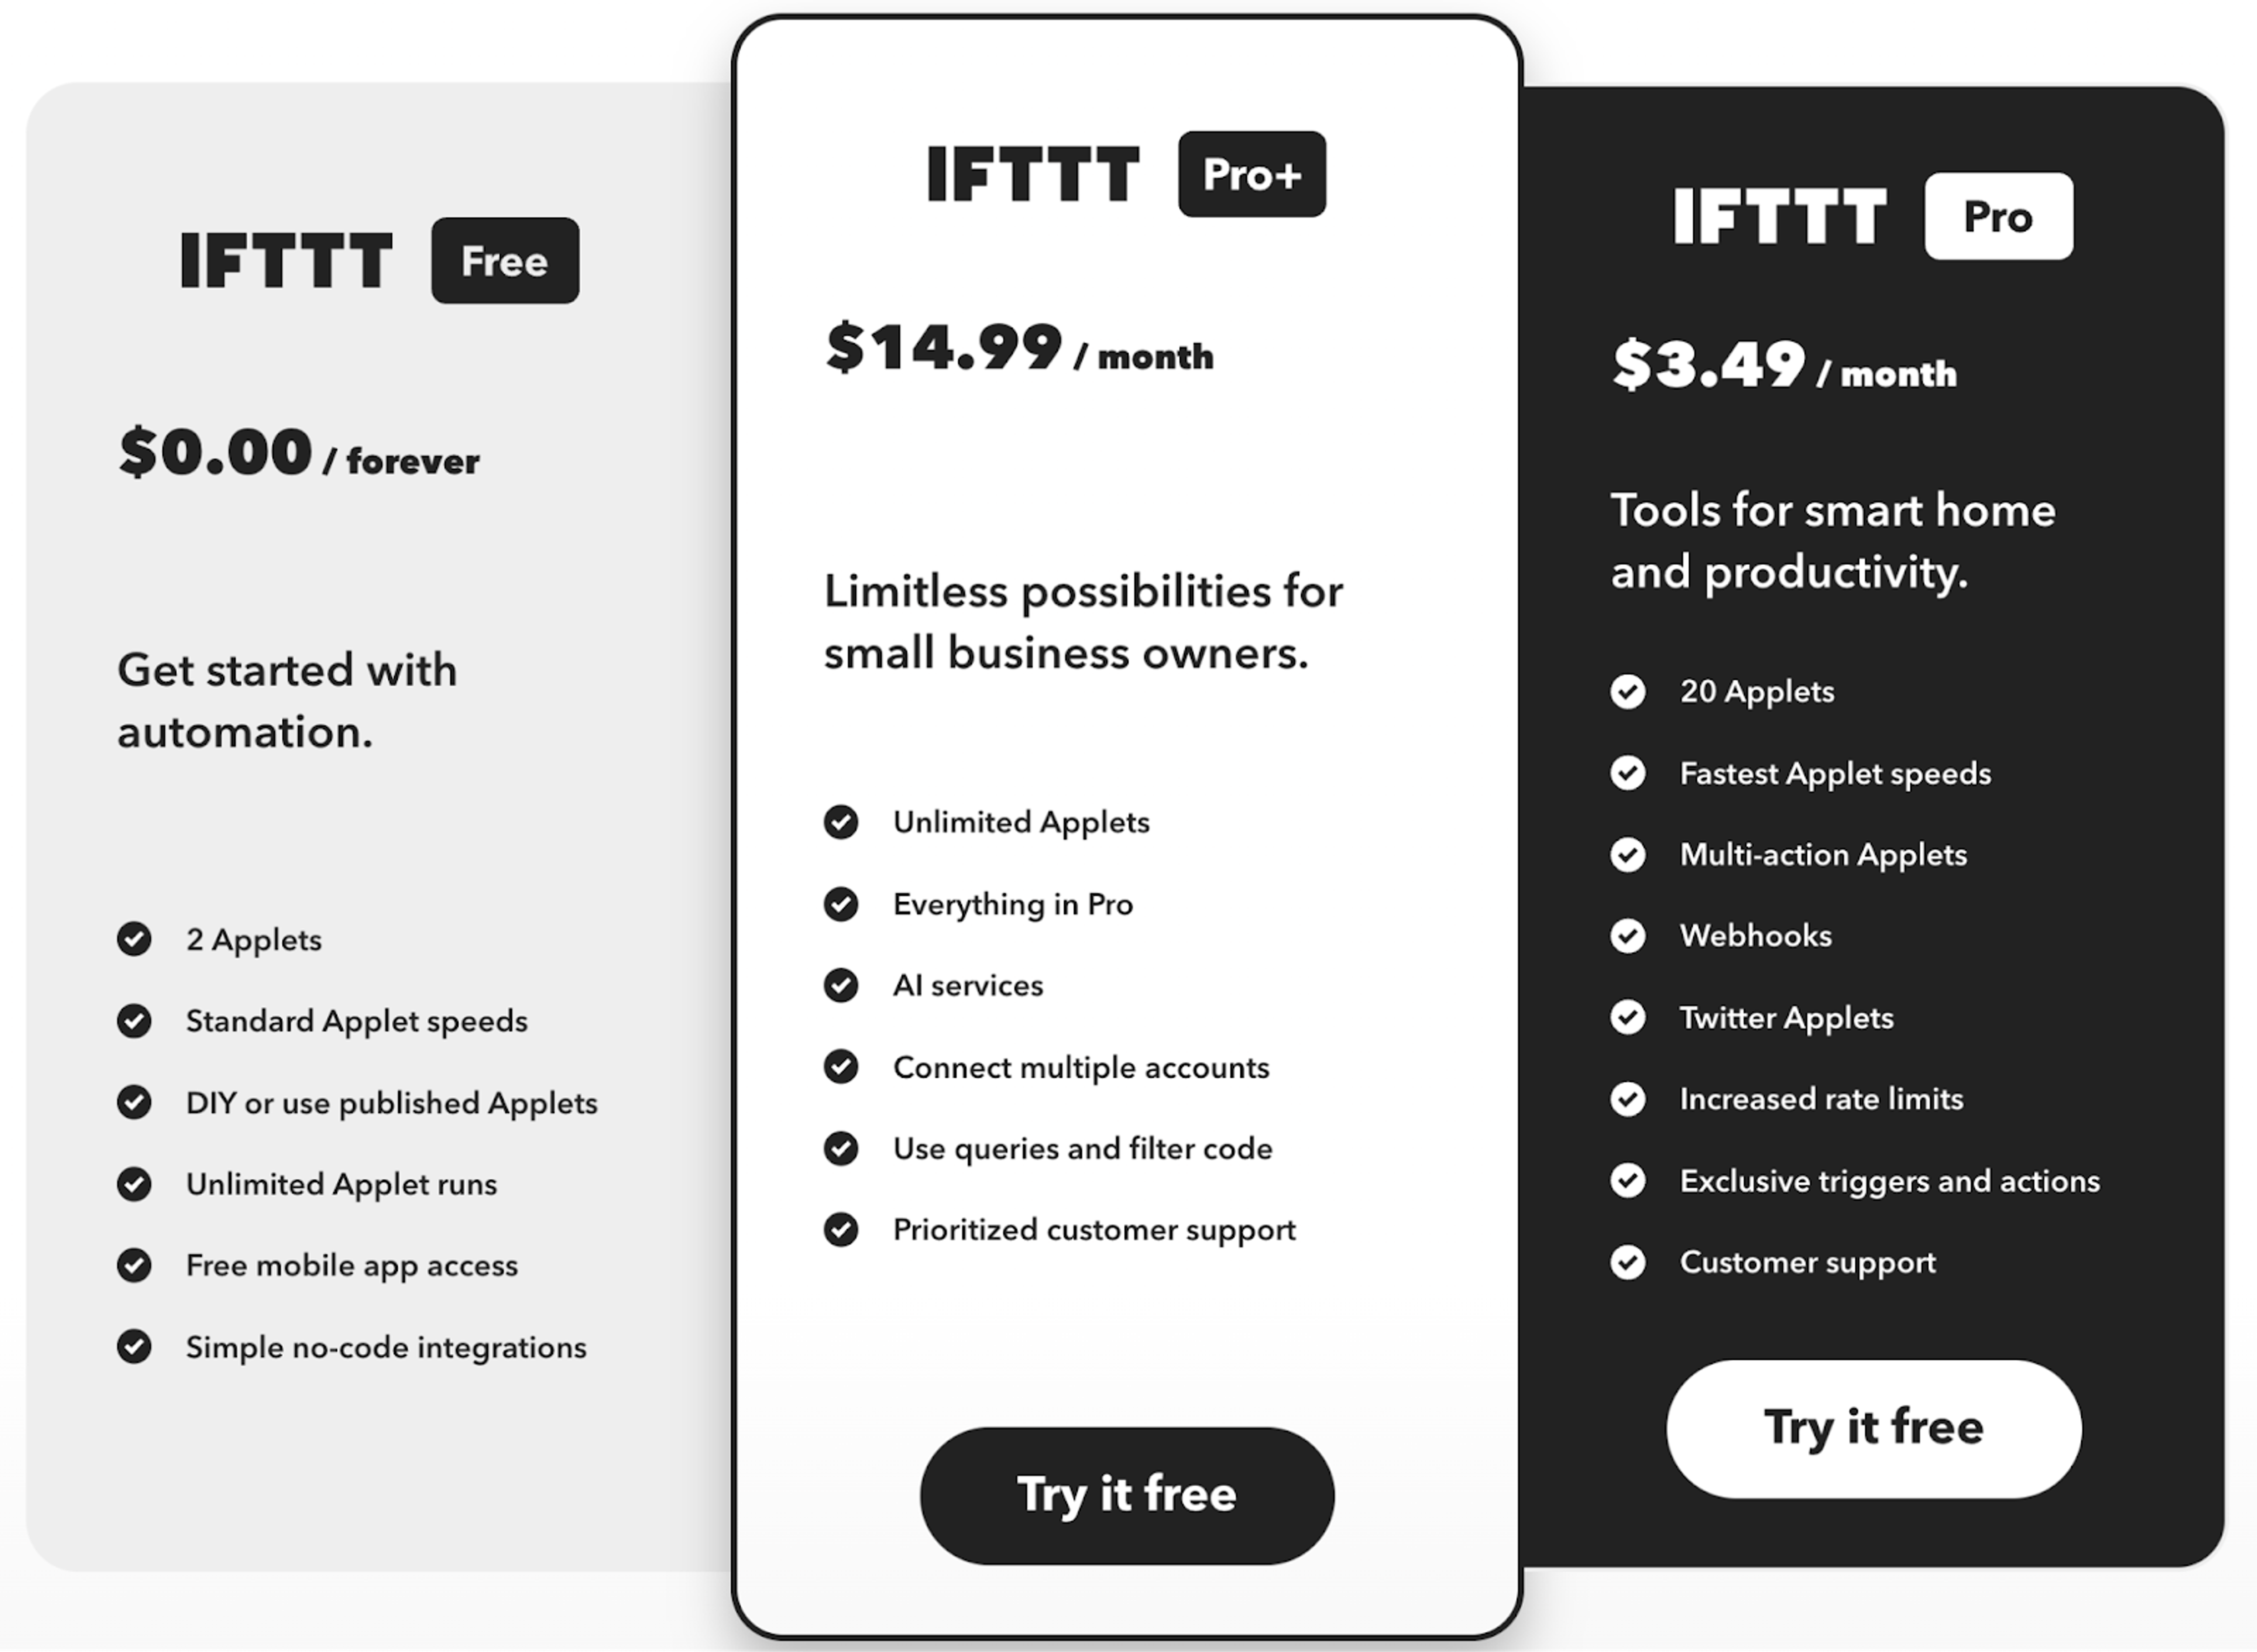 IFTTT pricing plans